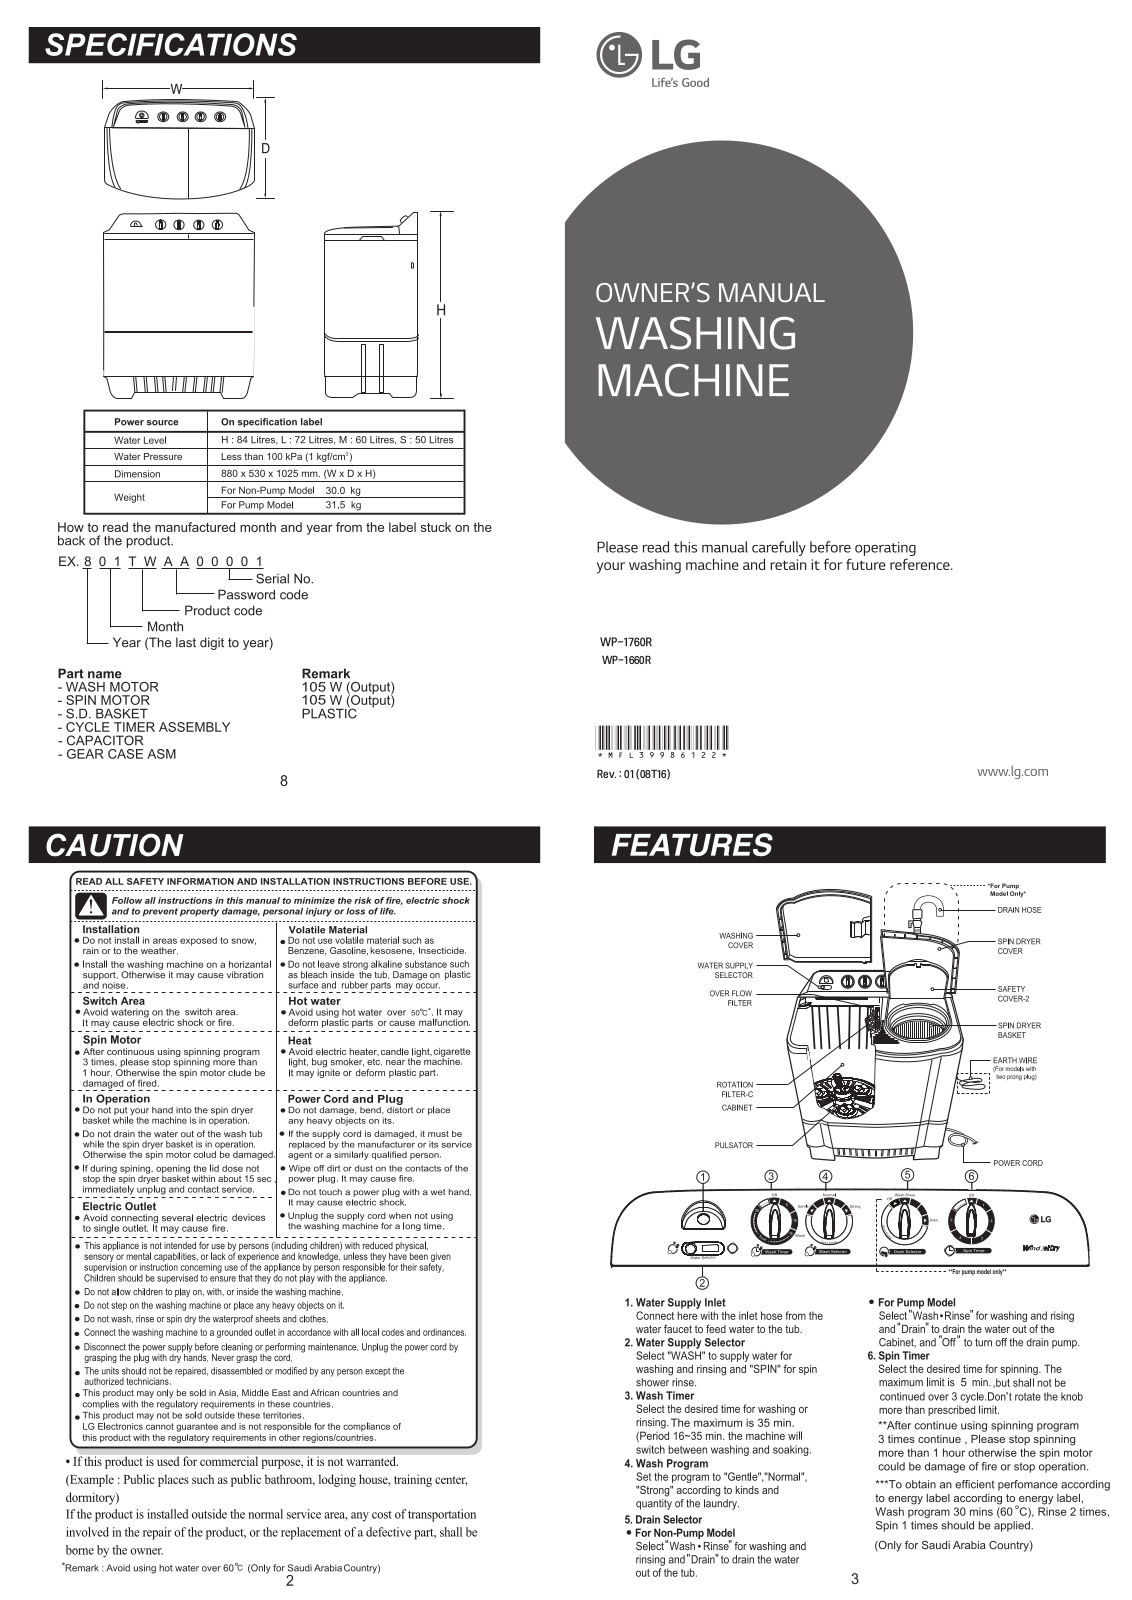 LG WP-1660R Owner's Manual